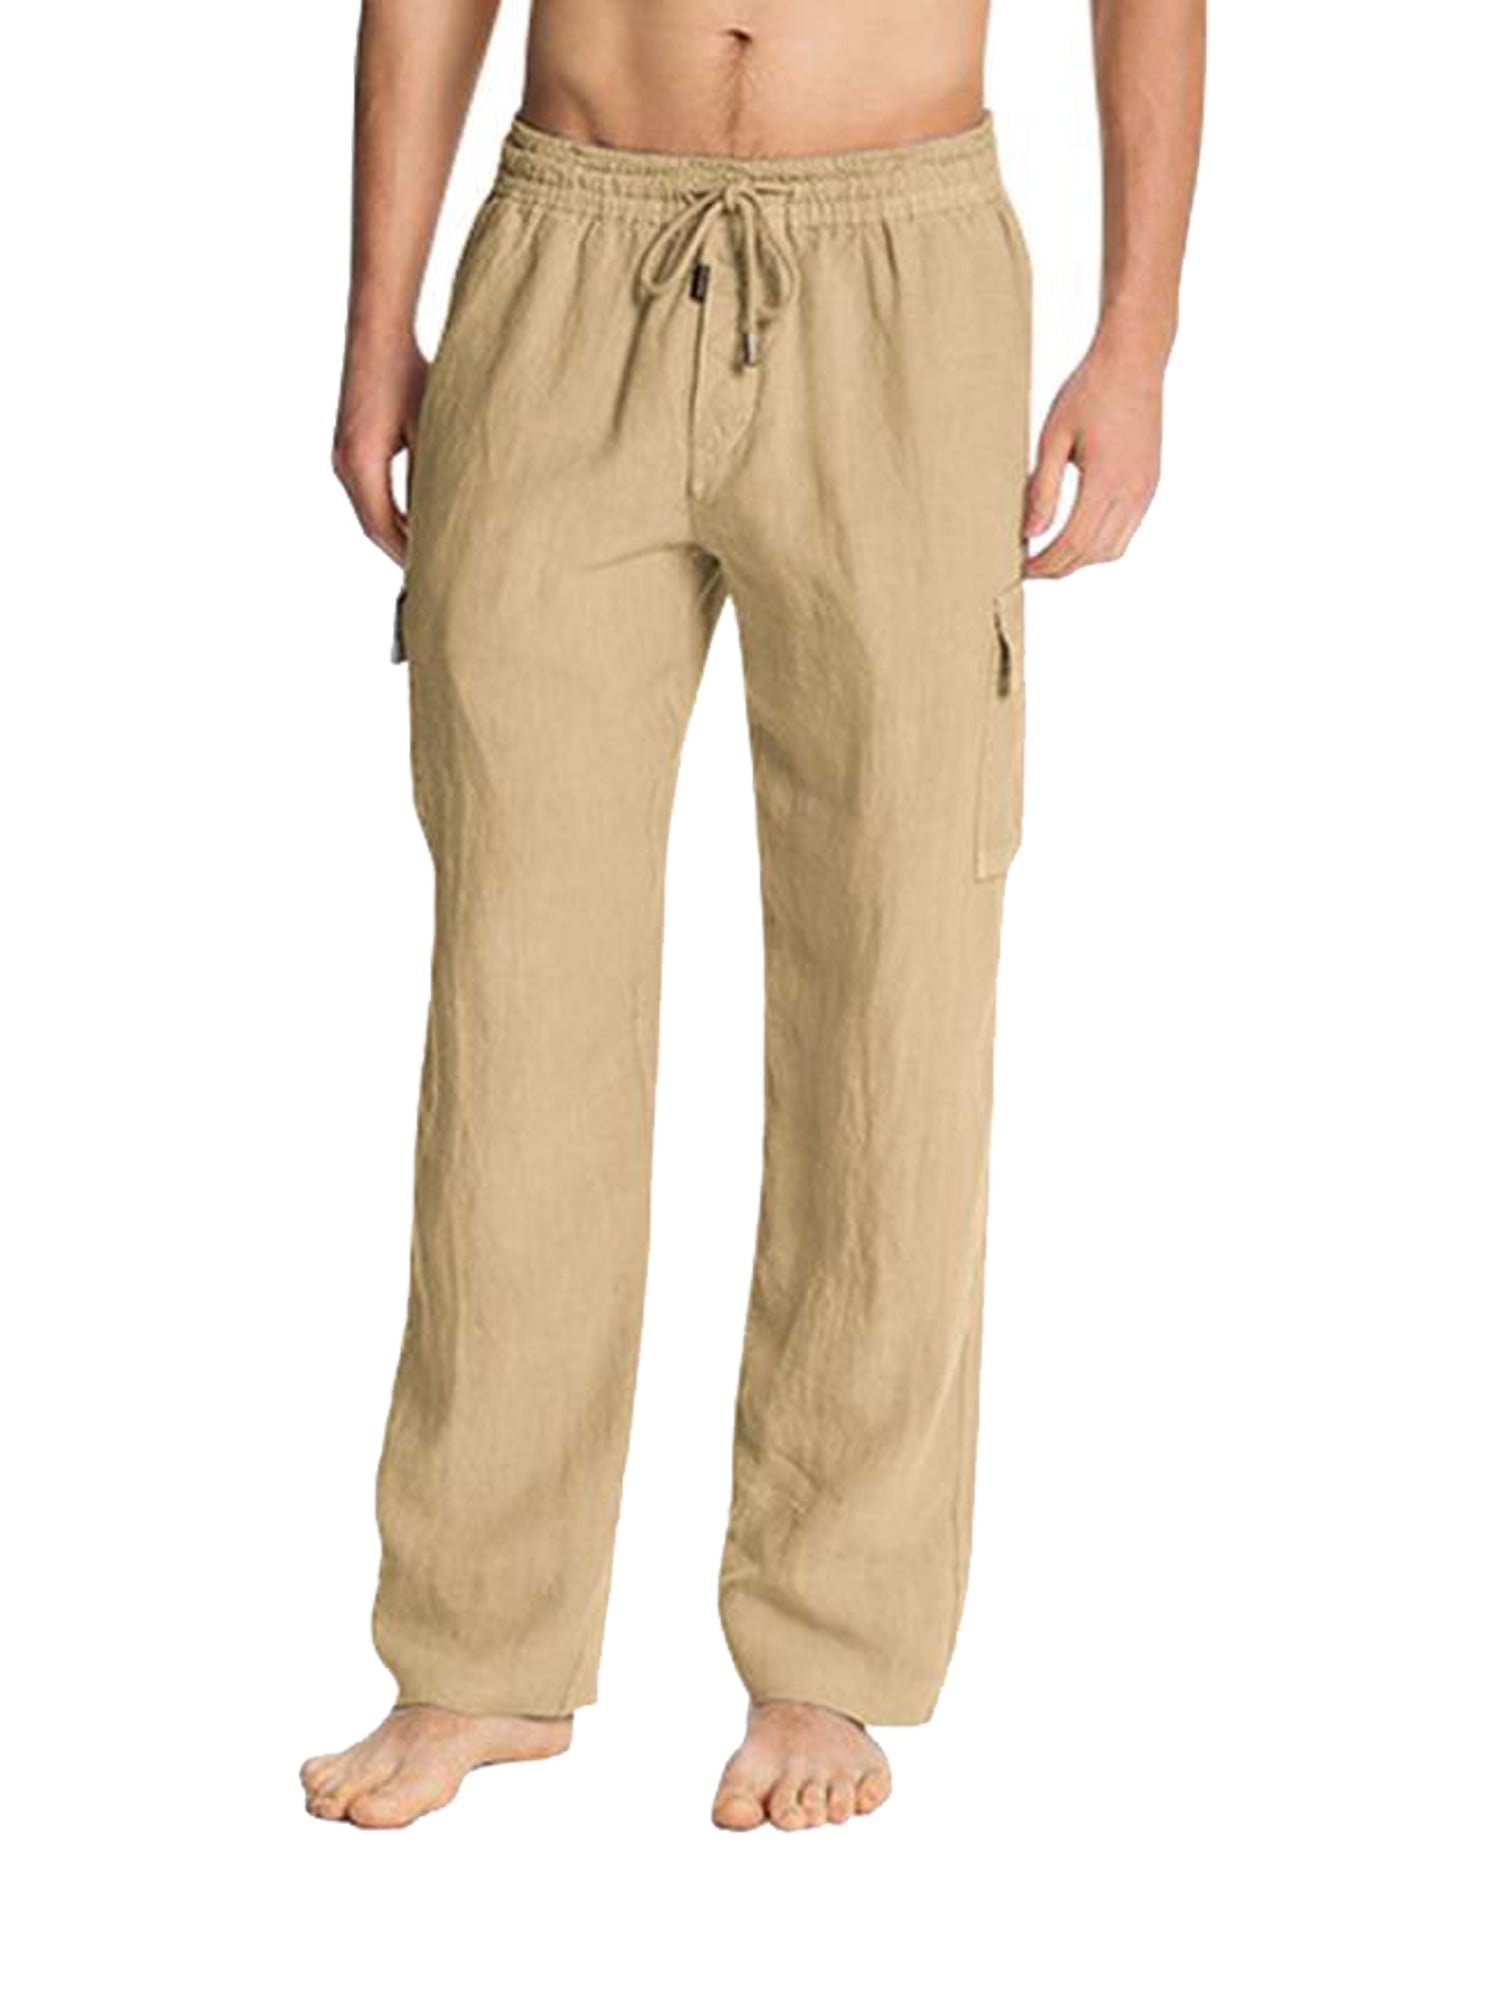 Men's Drawstring Cotton Linen Pants Solid Color Elastic Waist Relaxed ...